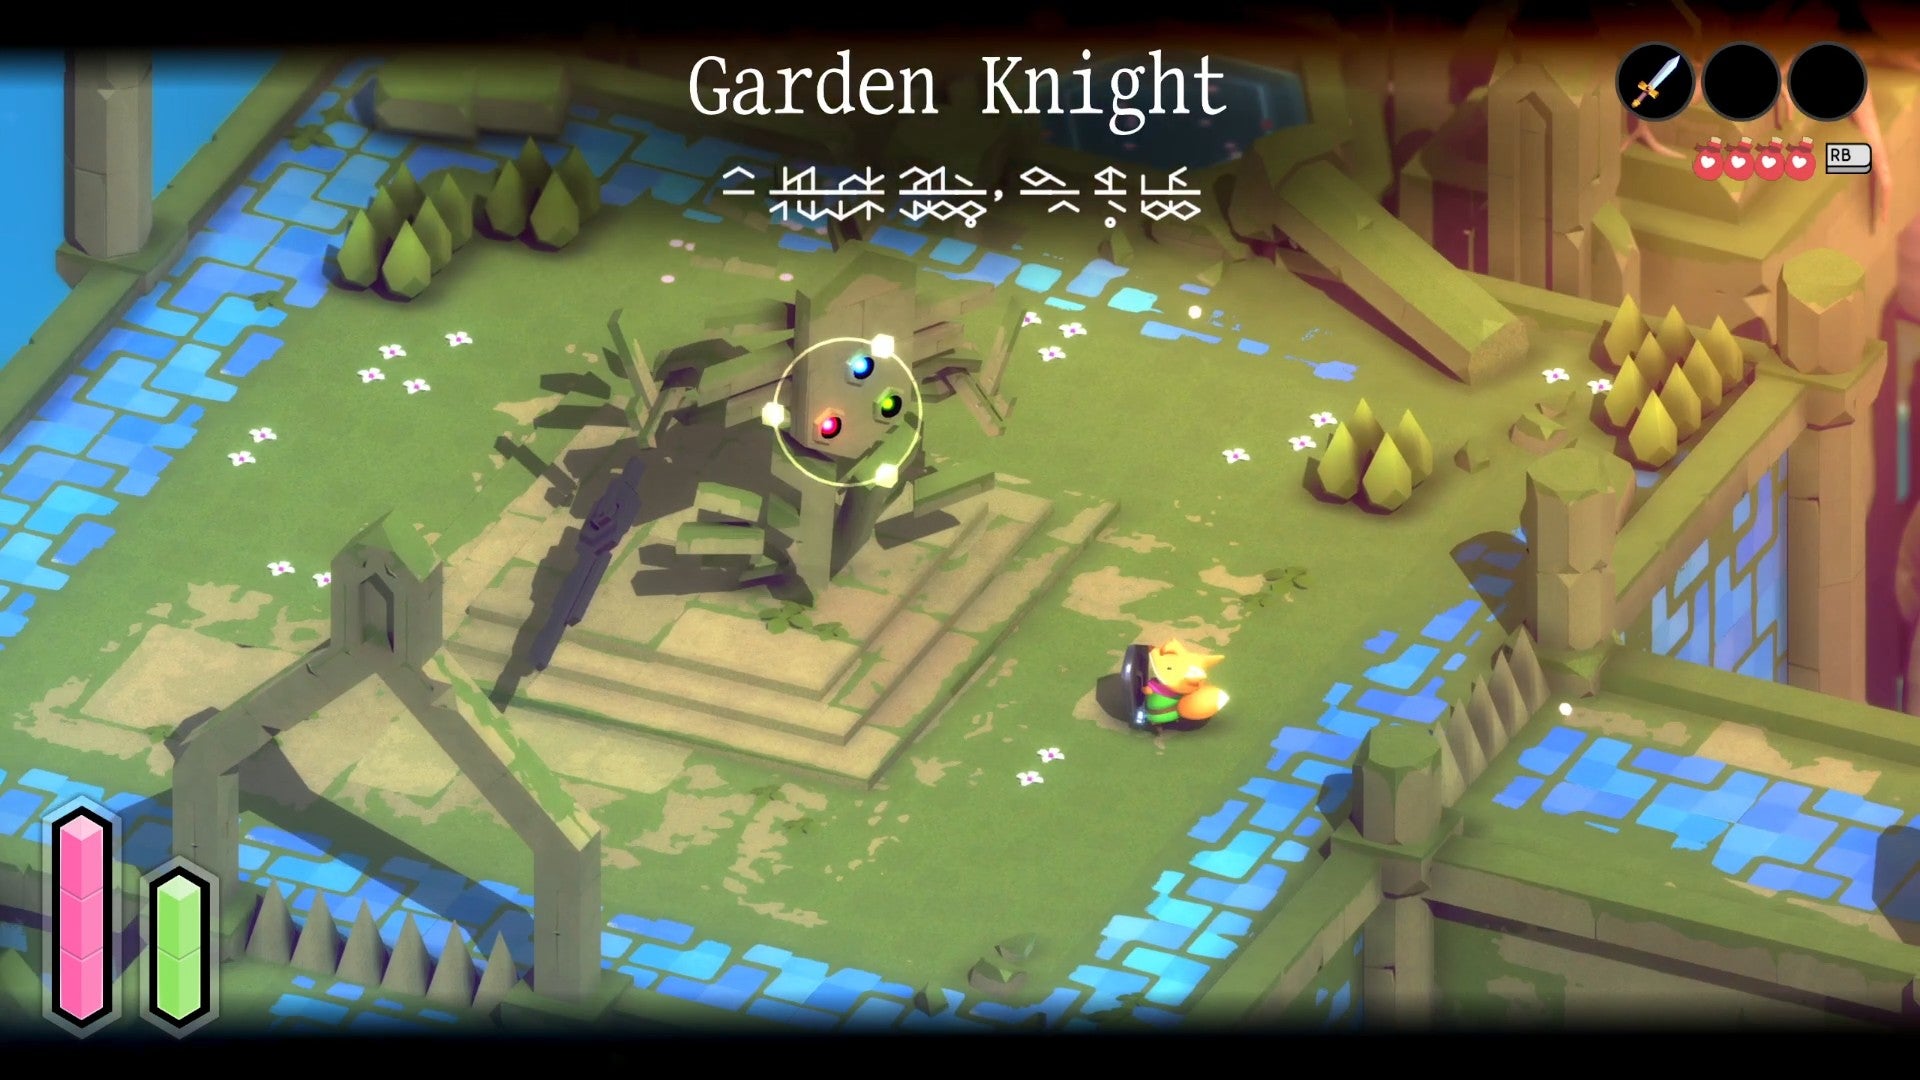 Tunic fox locking onto the Garden Knight boss in a grassy arena